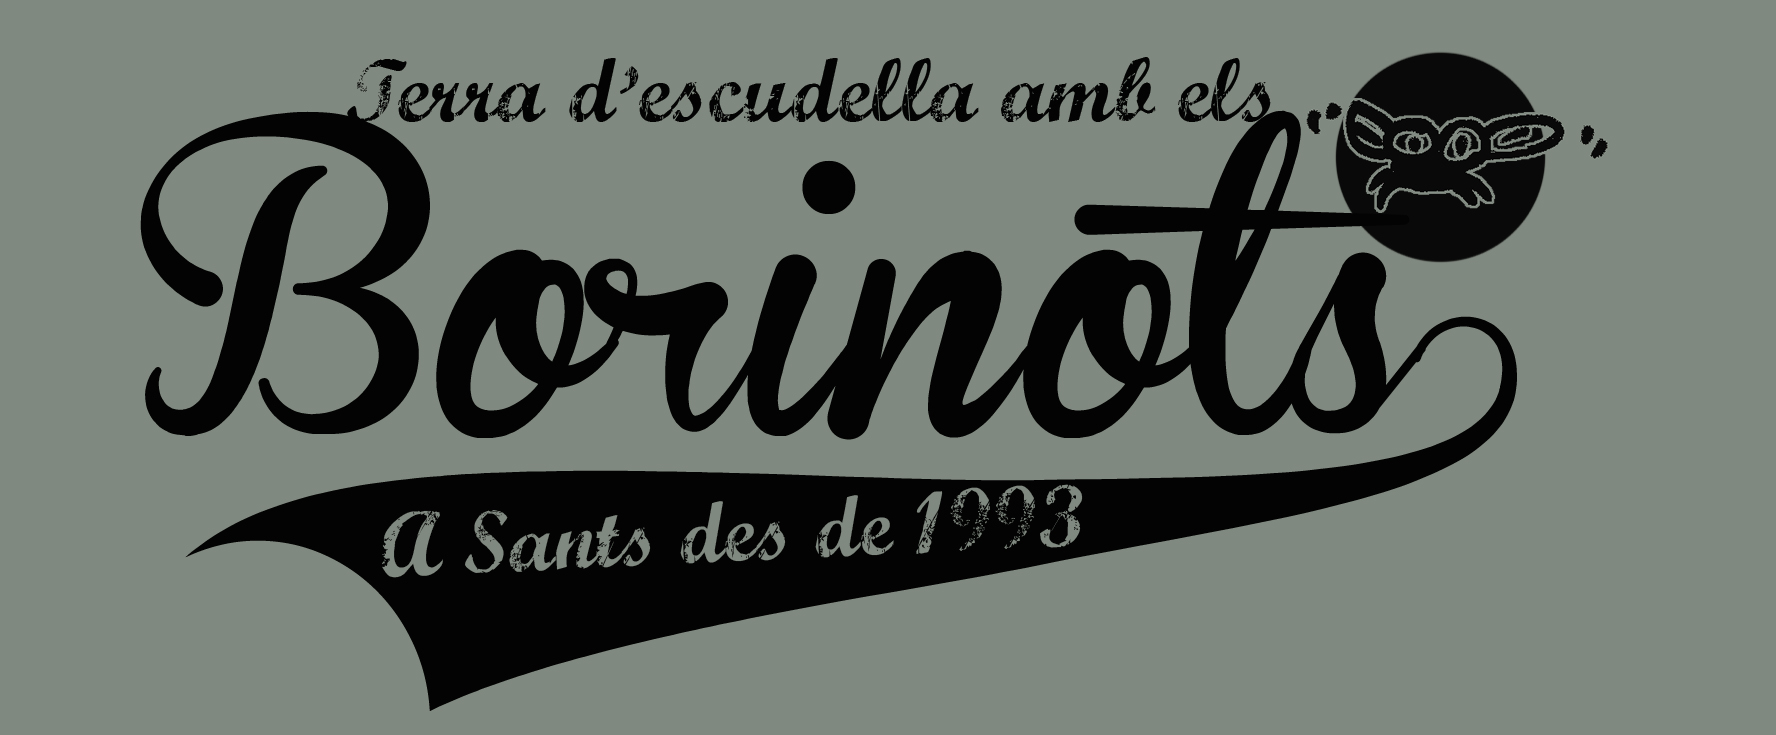 logo-samarreta-FM-2013